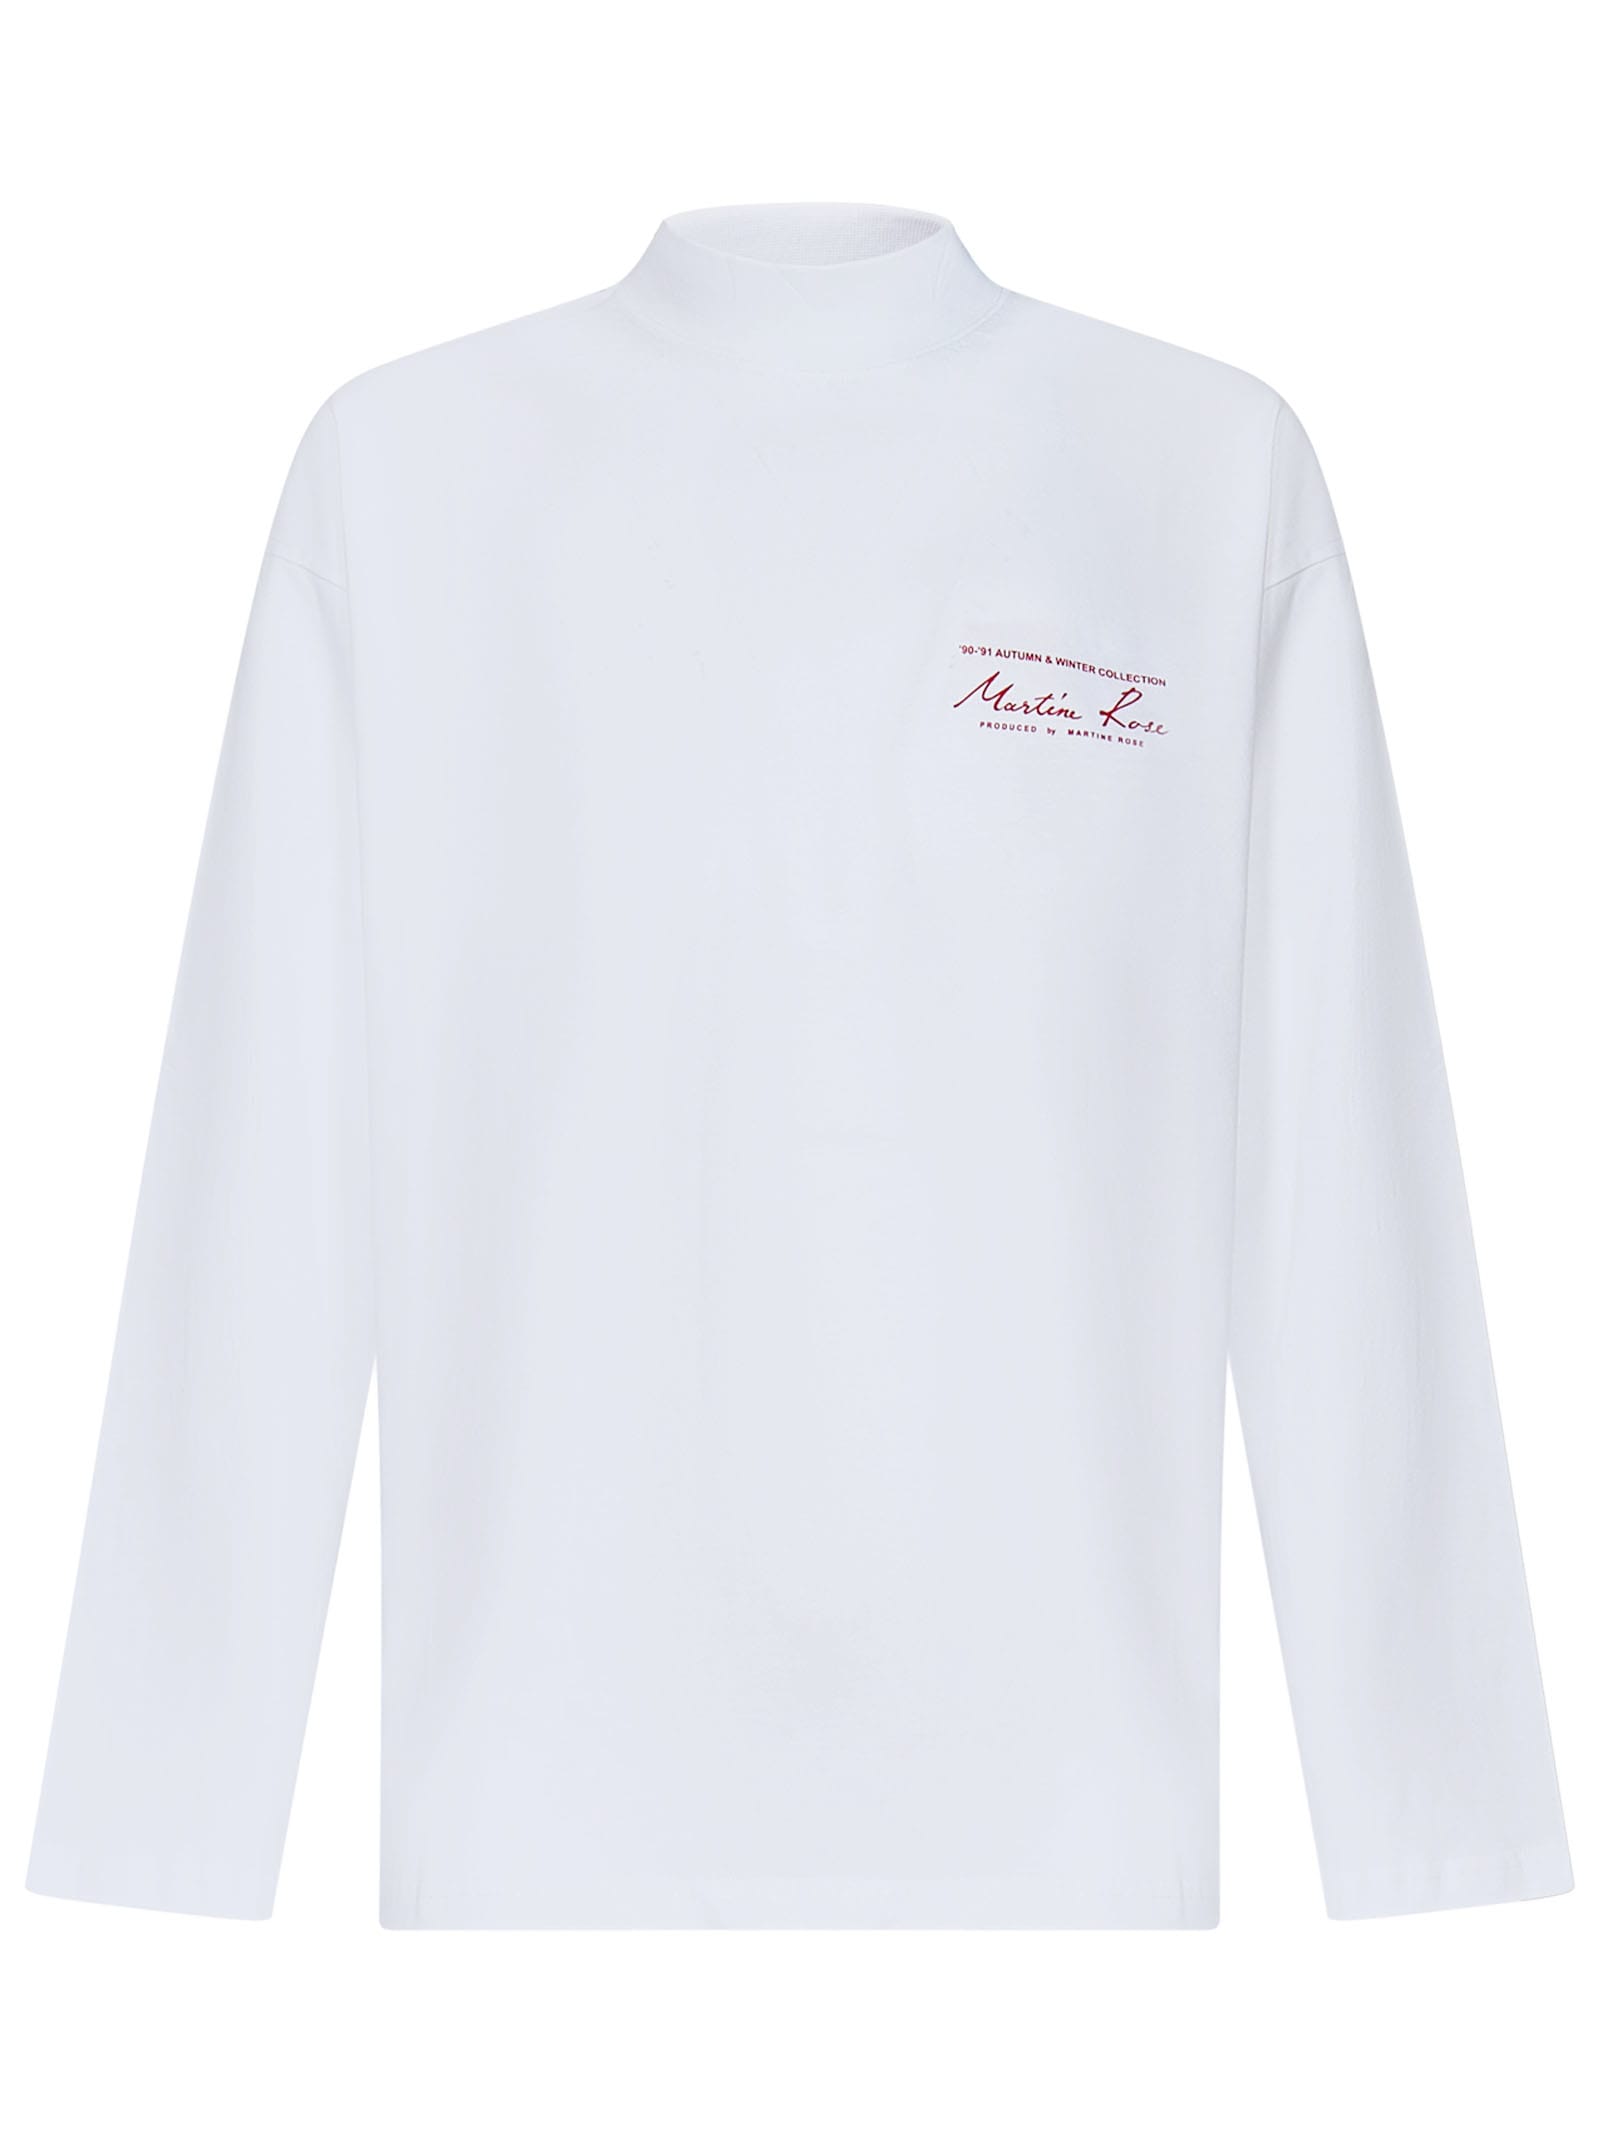 Martine Rose Man T-shirt White Size S Cotton